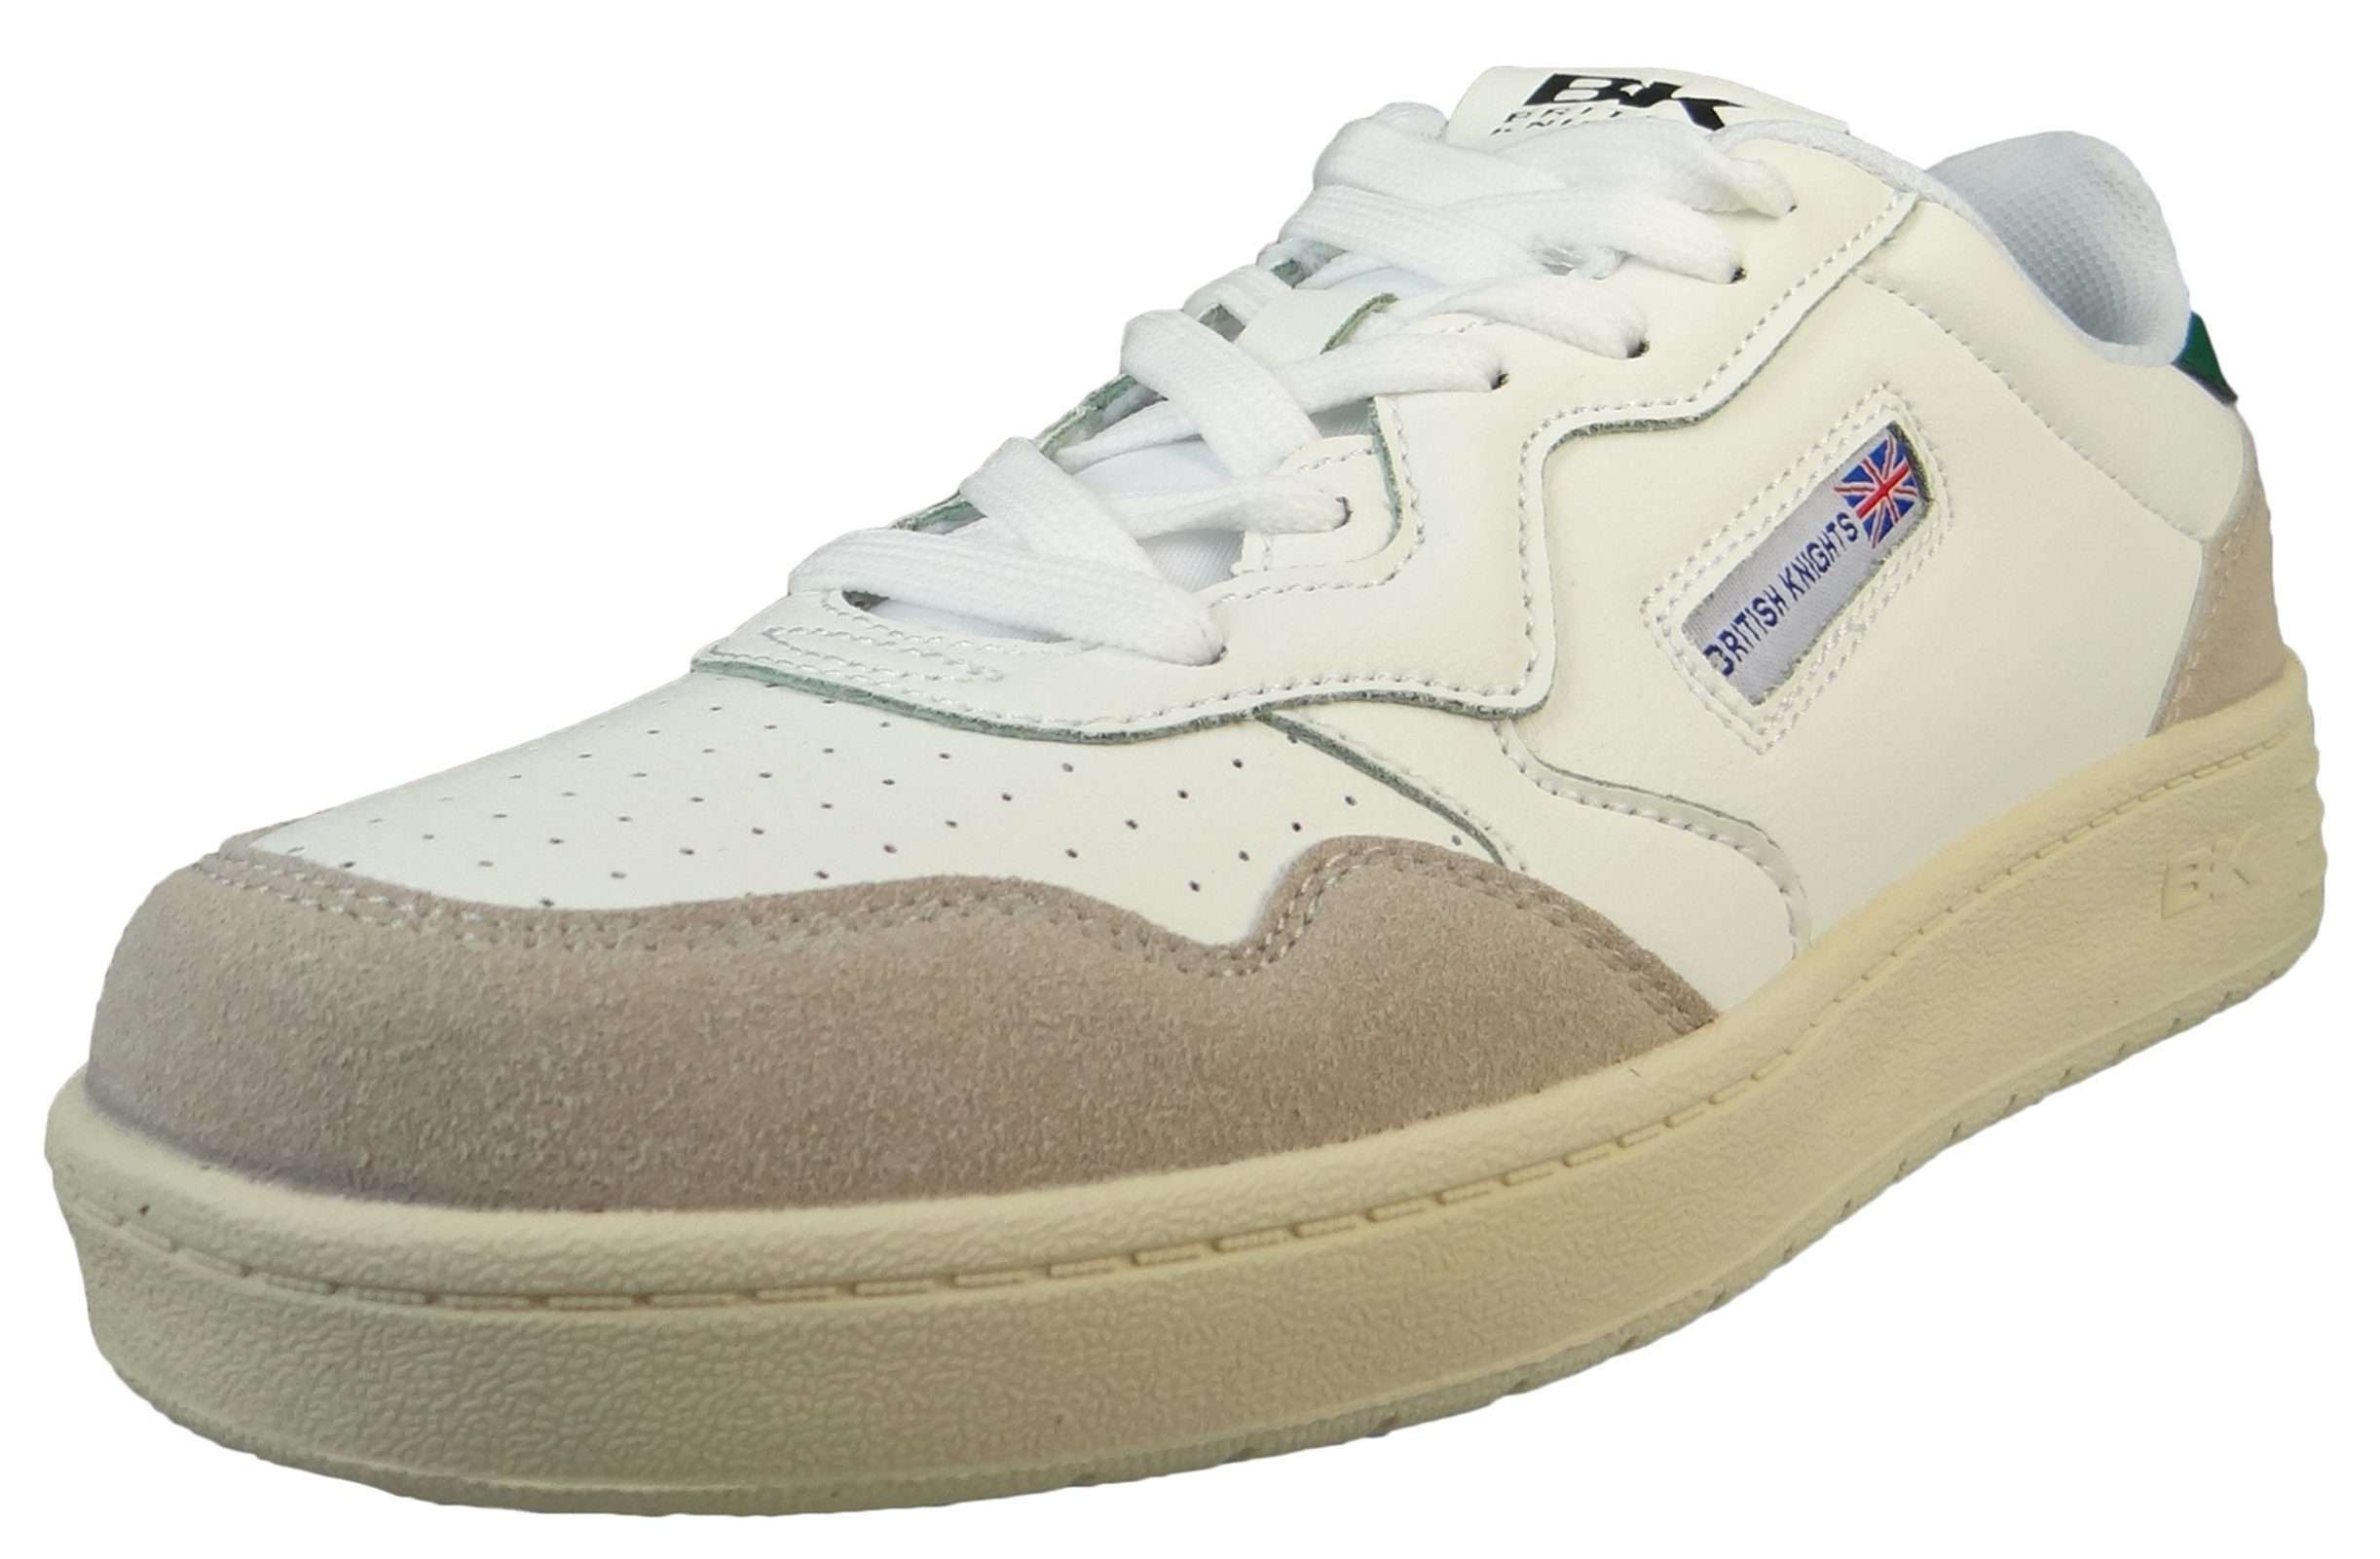 Sneaker British B51-3618 WHITE/ GREEN 04 (02001030) Knights White/Green